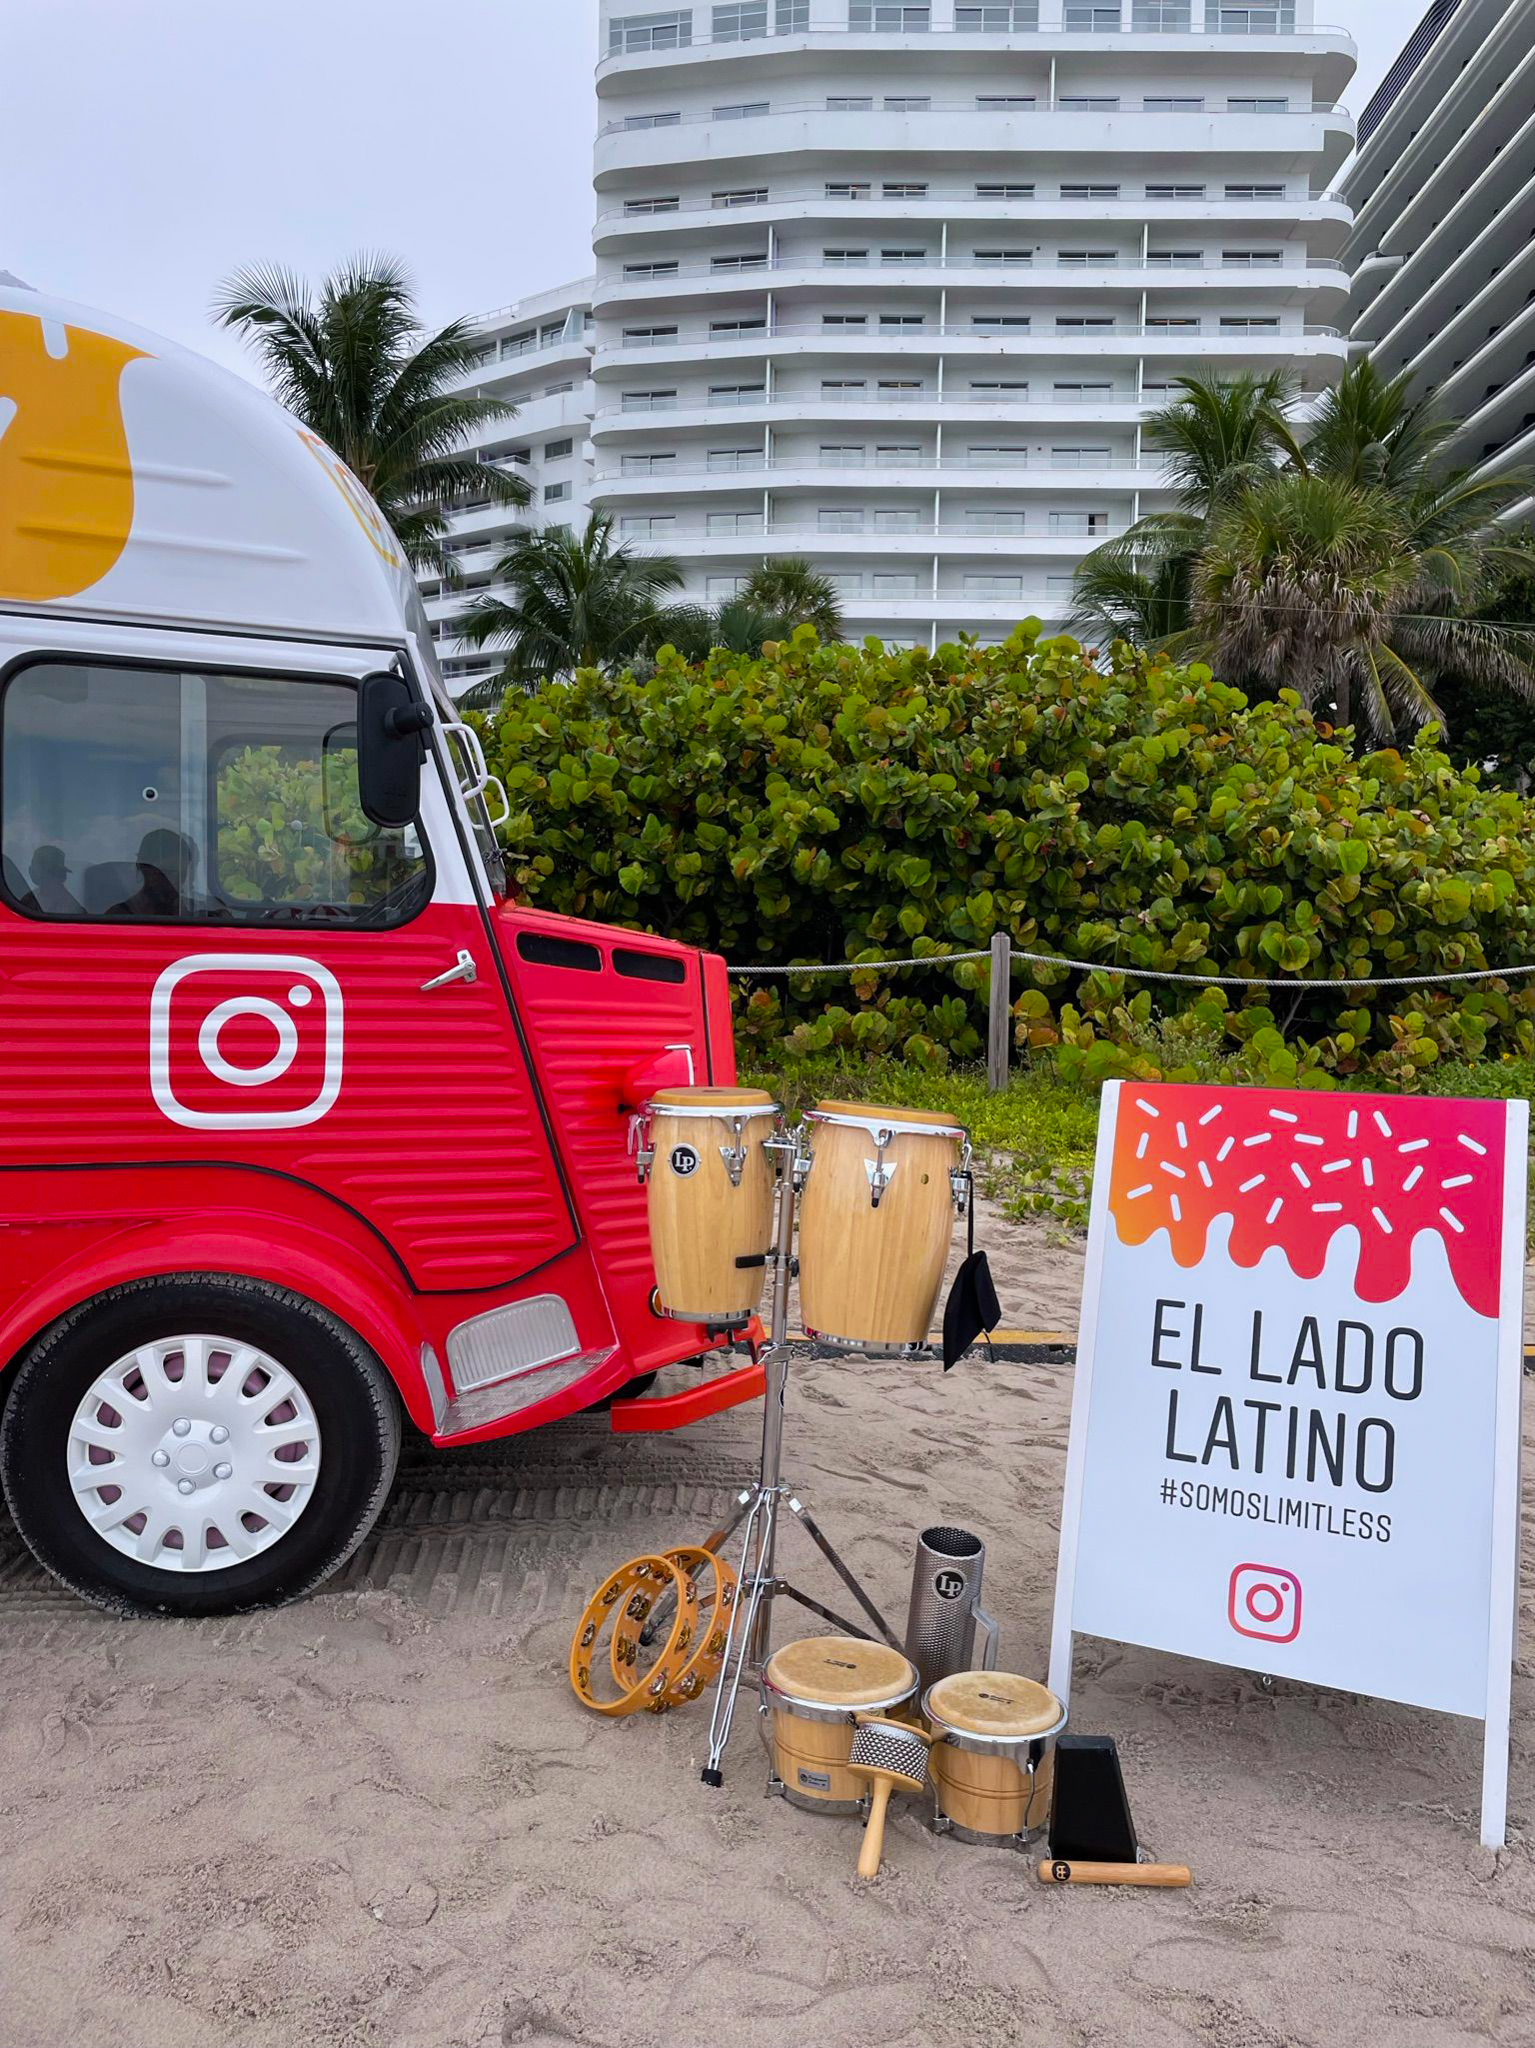 Instagram branded promo on beach.